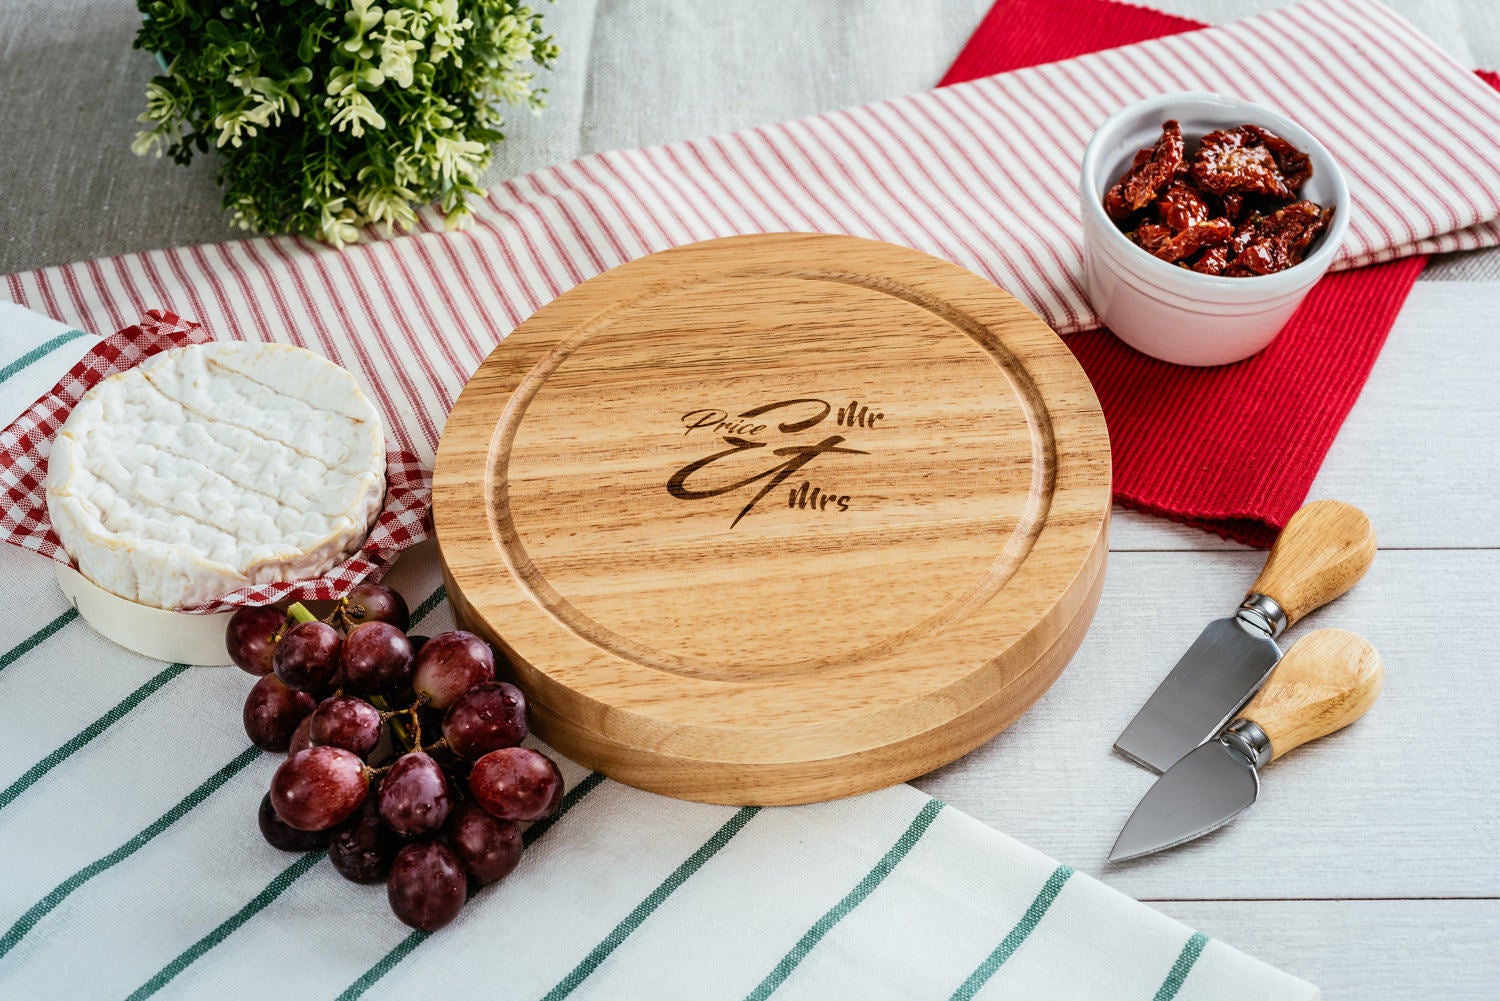 Personalised round wooden cheese board set - Split monogram Mr & Mrs